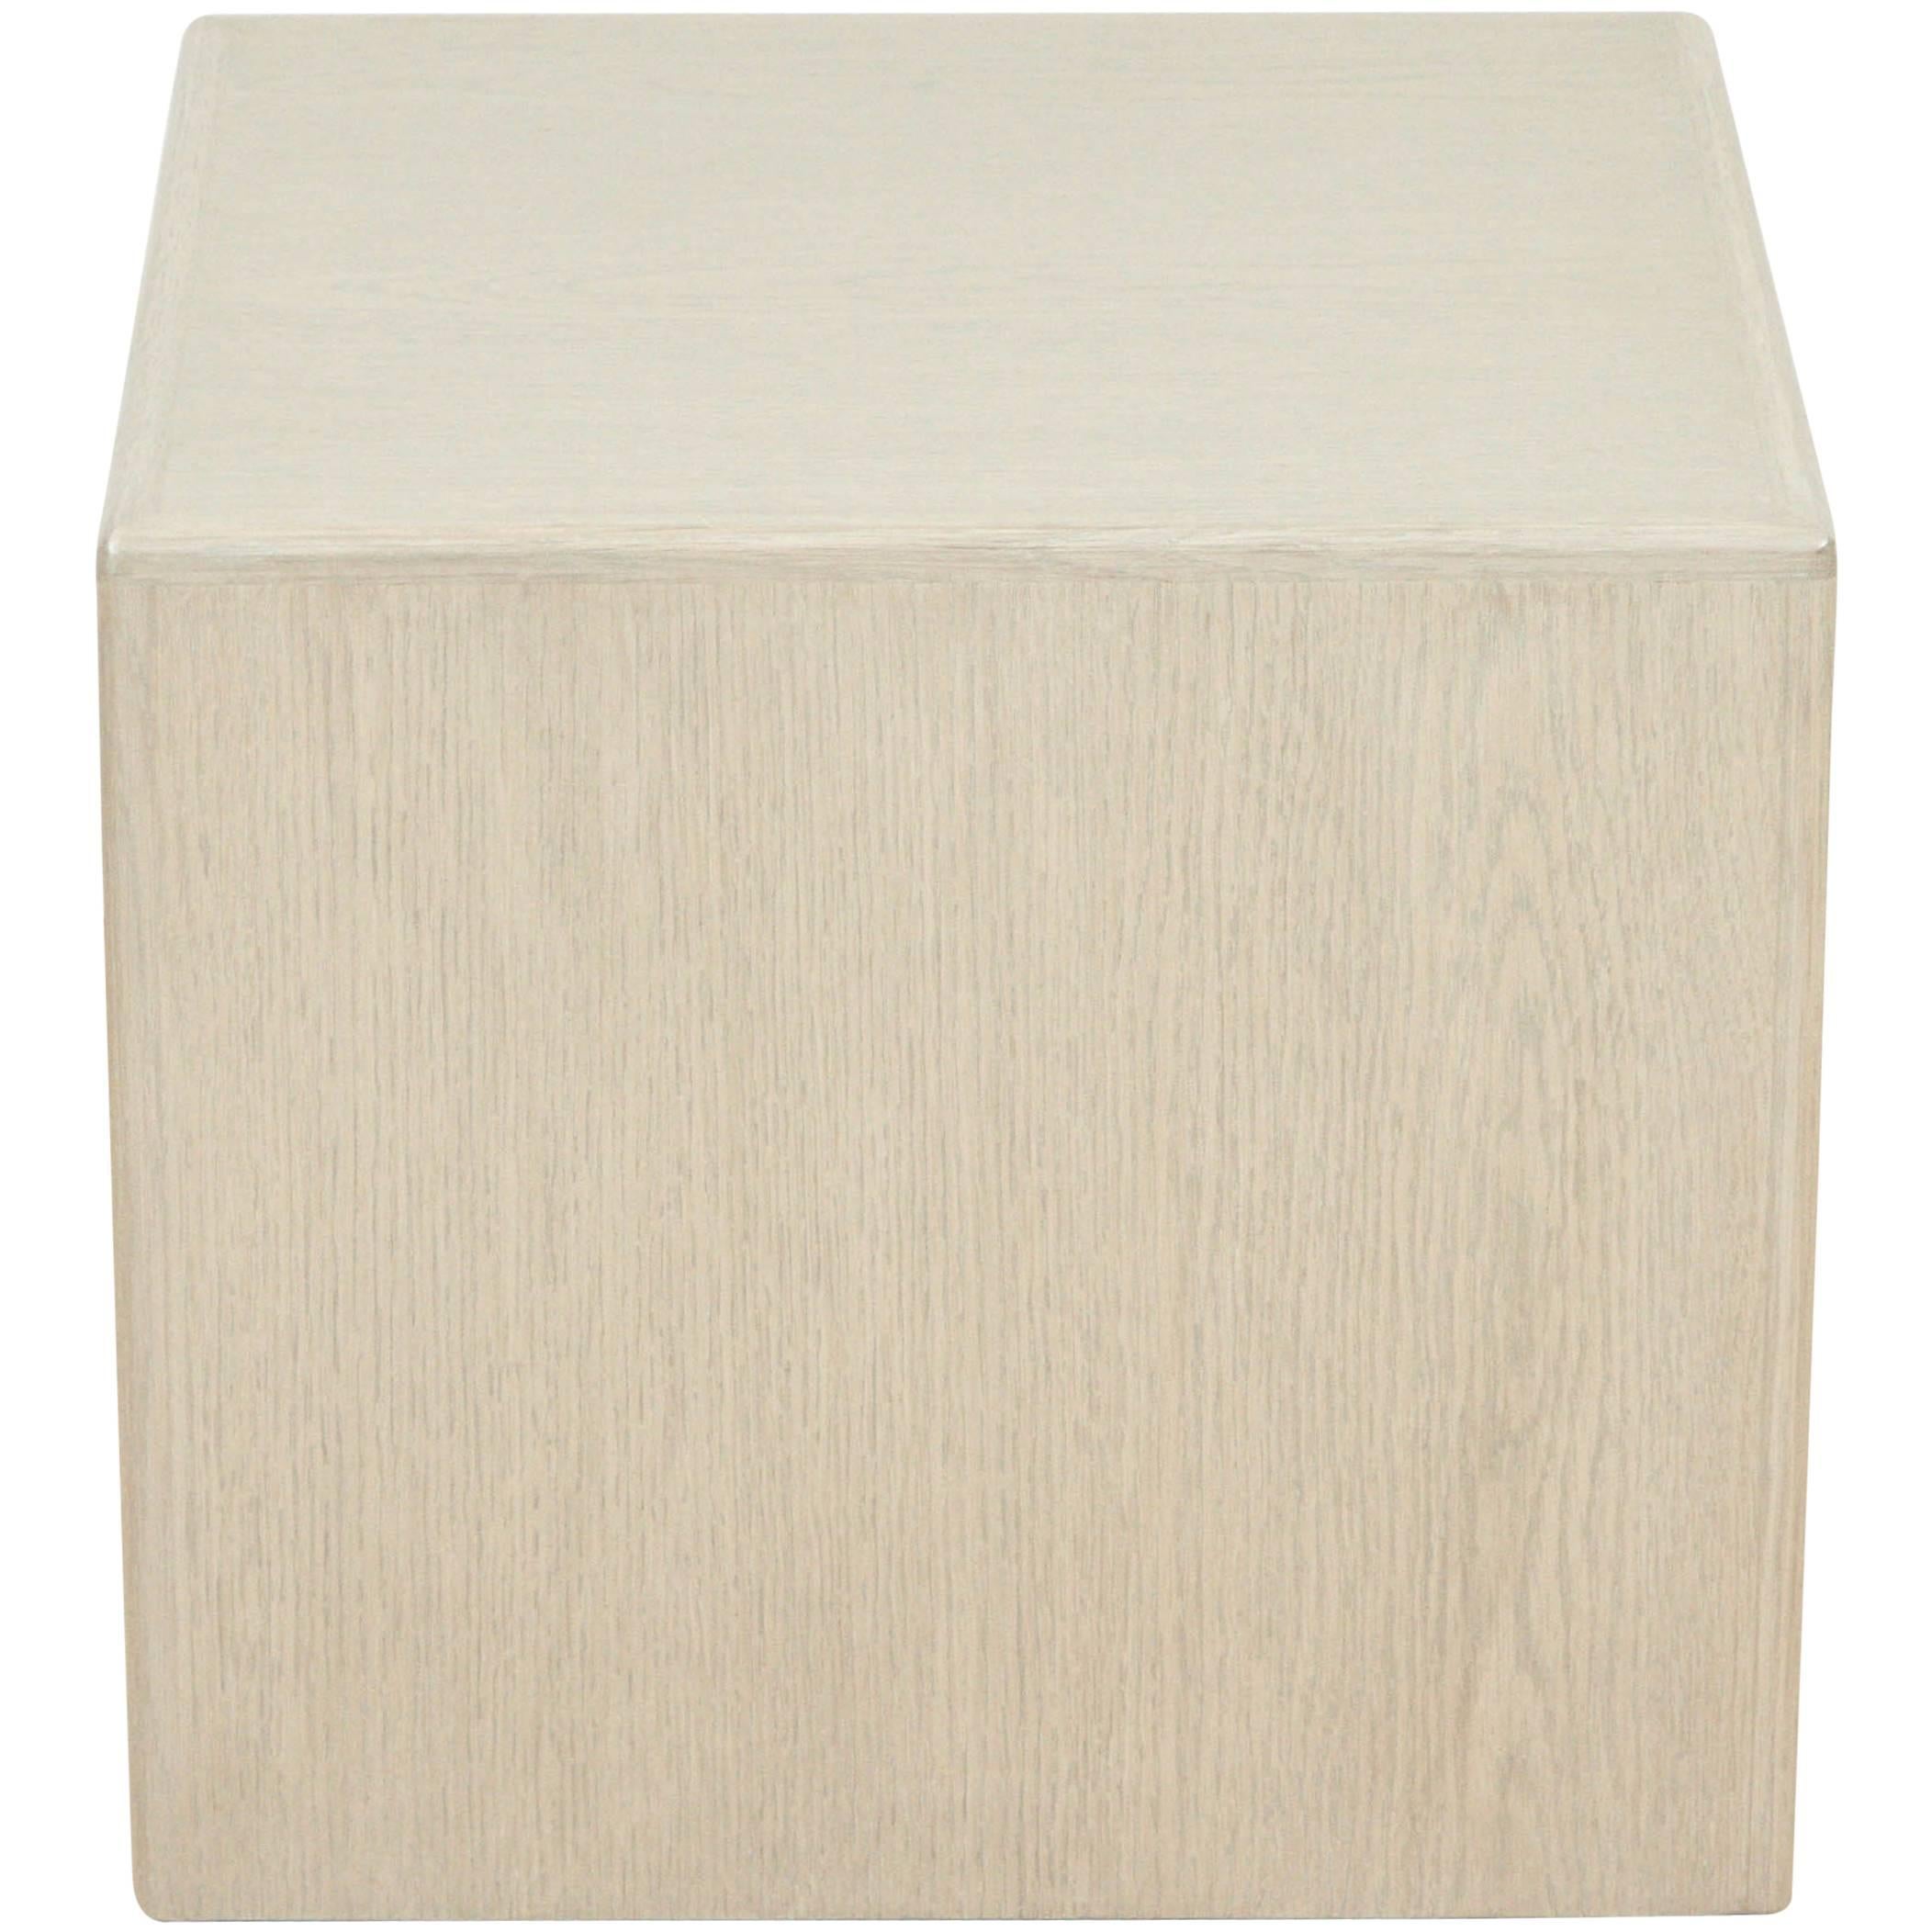 Small Whitewashed Oak Cube Table by Lawson-Fenning